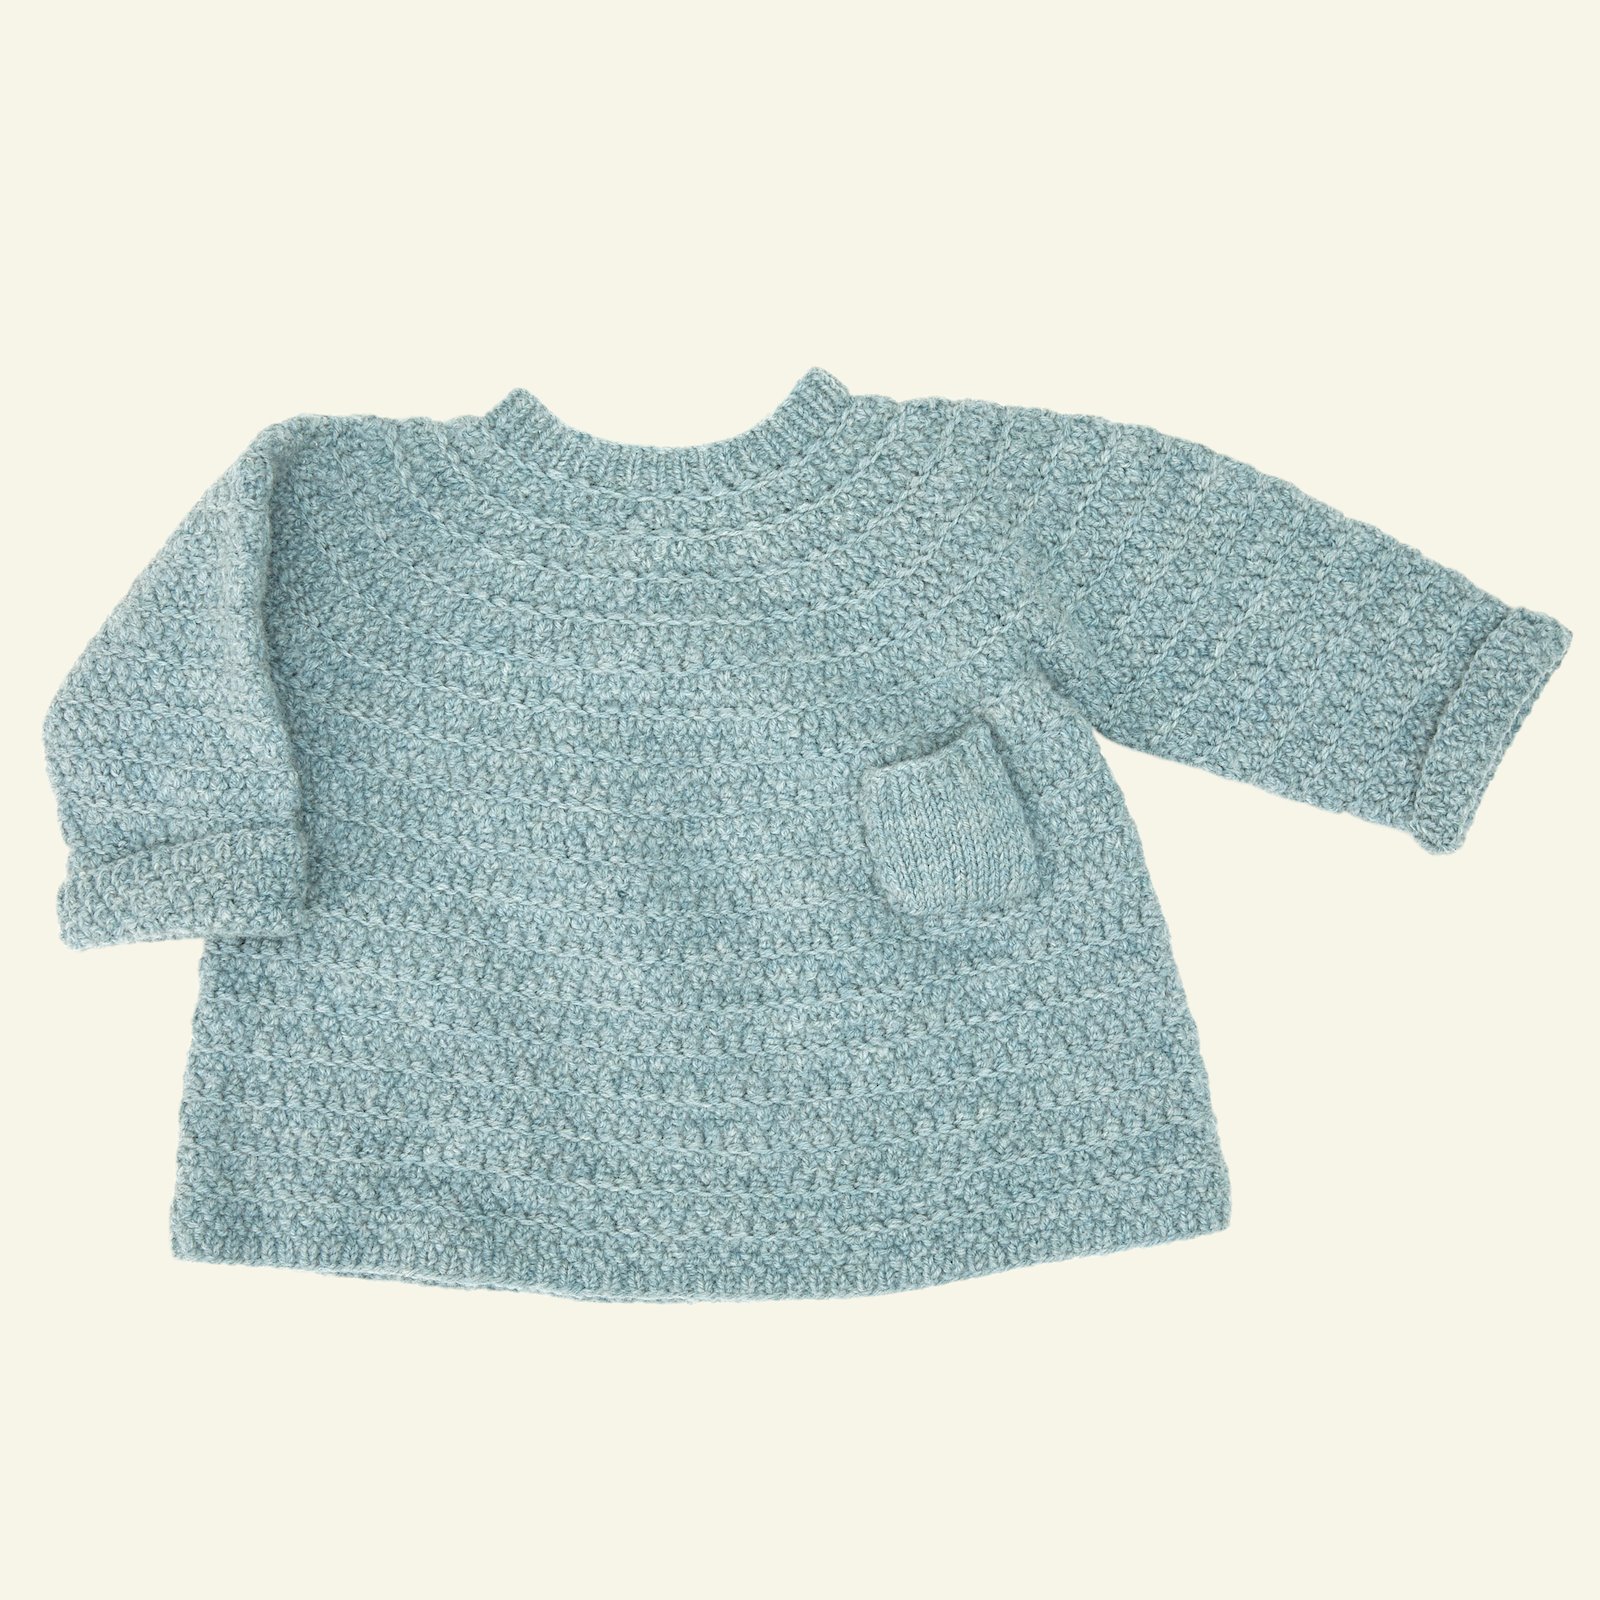 FRAYA knitting pattern - Huggable Me Sweater, kids & babies 90054506_fraya6001_sskit